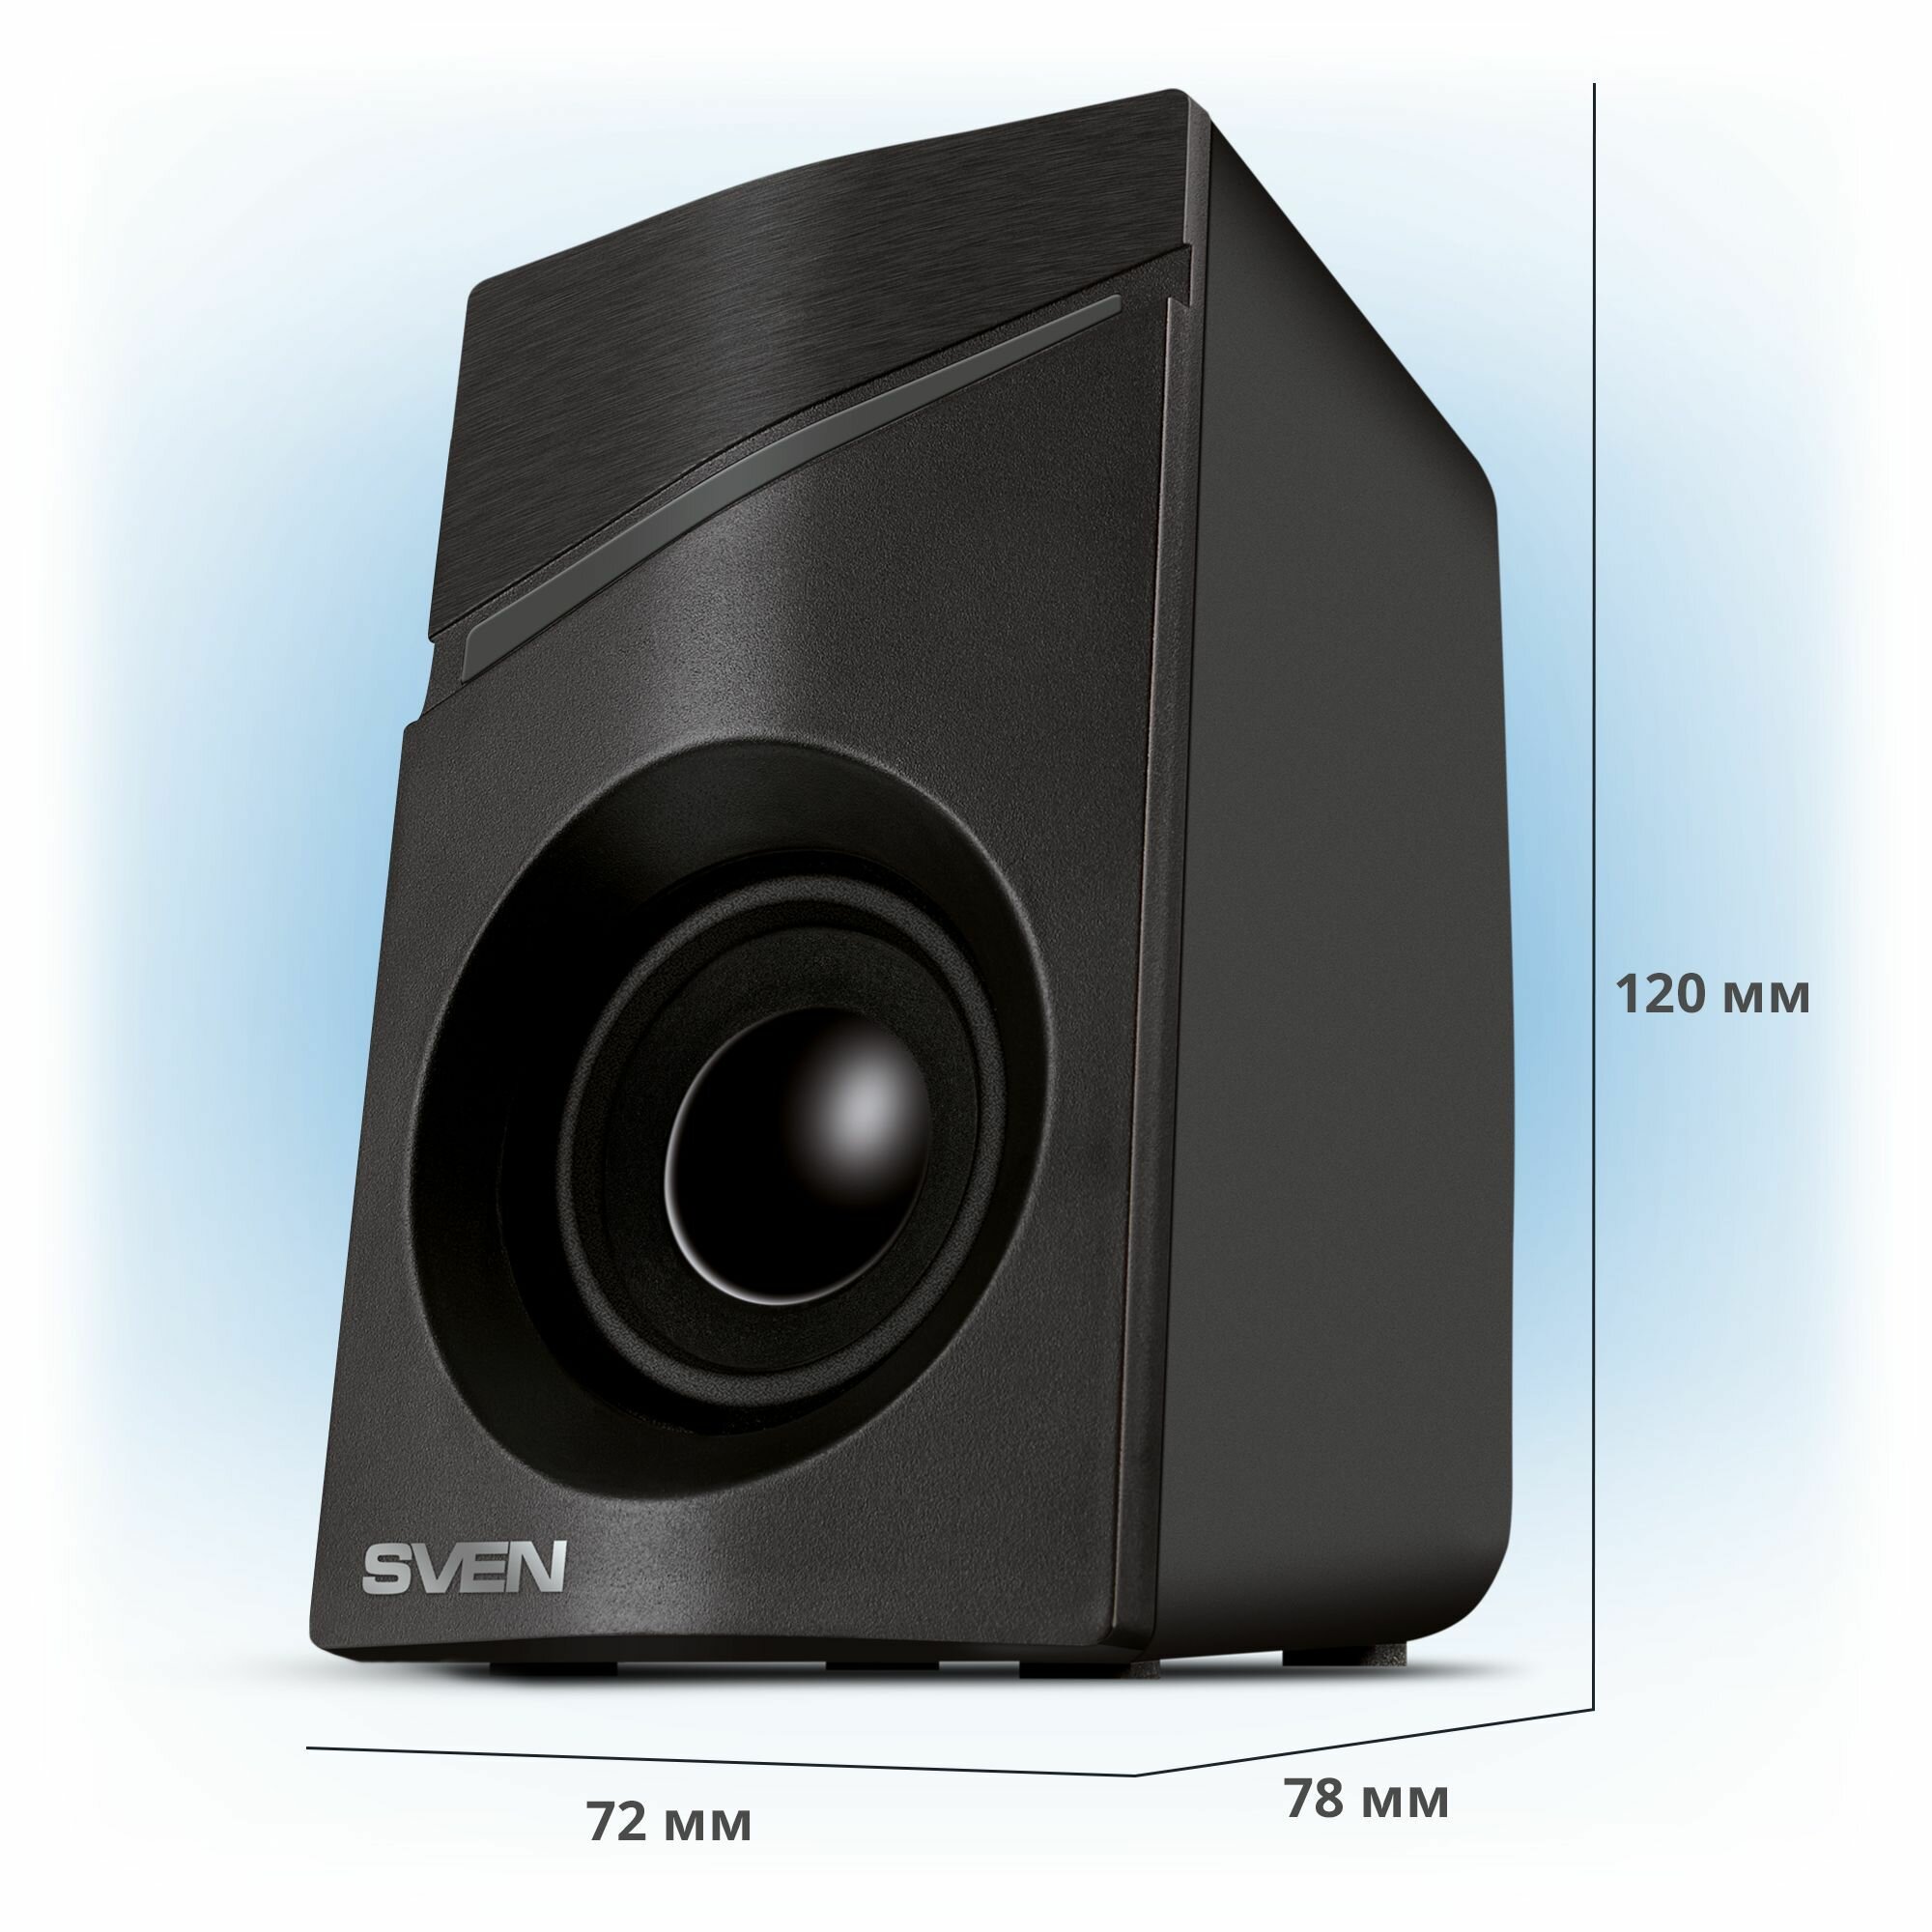 Компьютерная акустика 2.0 Sven черная (6 Вт, питание USB, подсветка) - фото №4